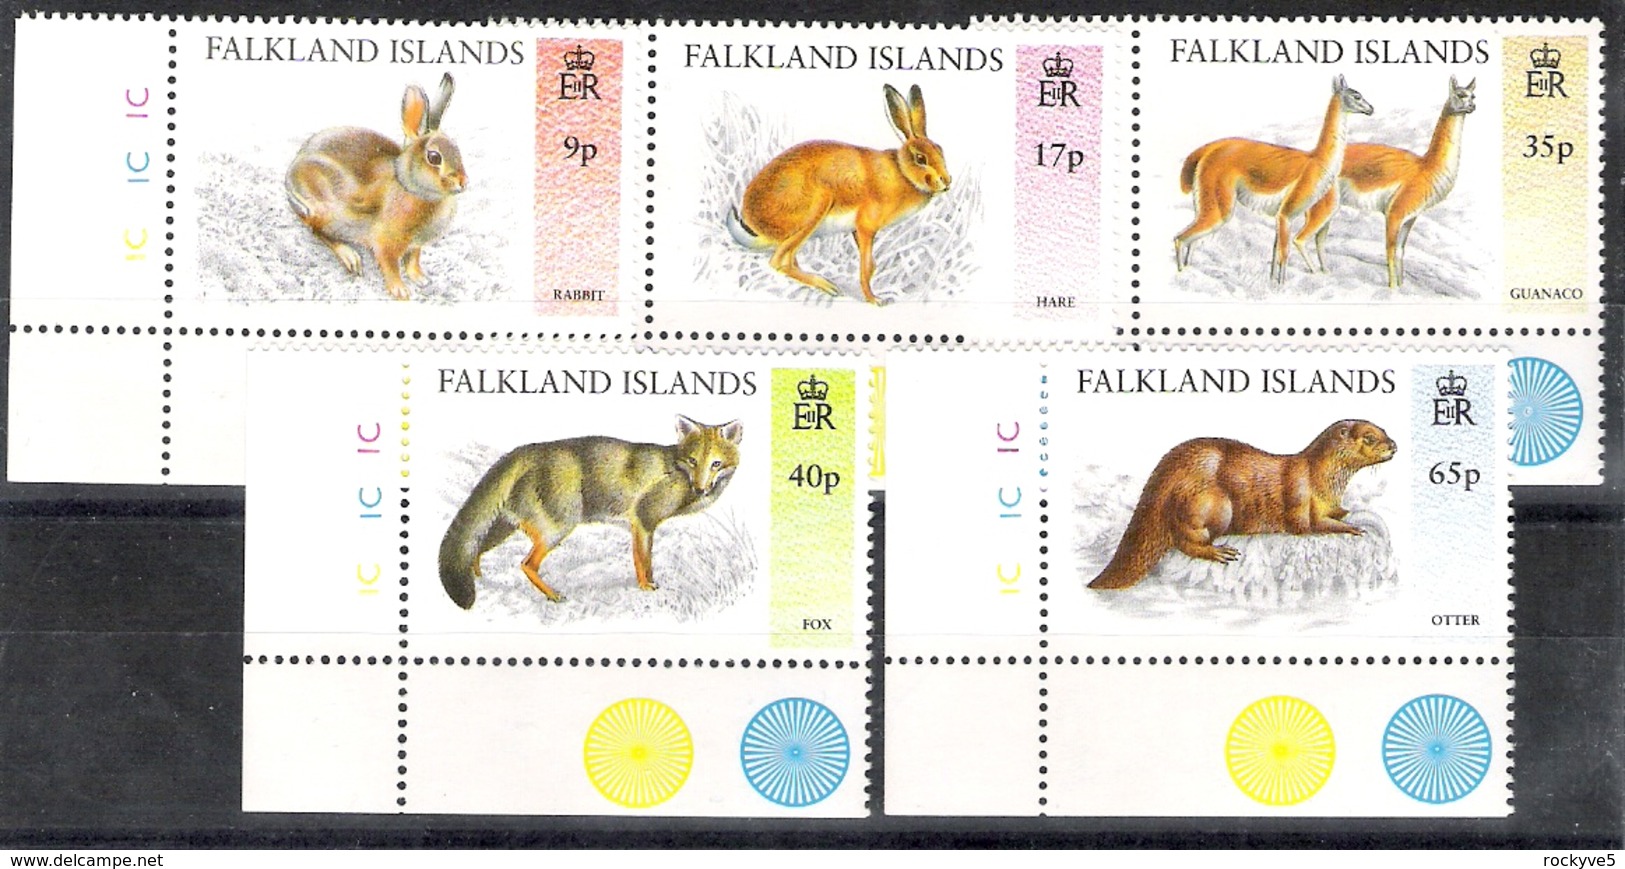 Falkland Islands 1995 Introduced Species MNH CV £9.30 - Falkland Islands